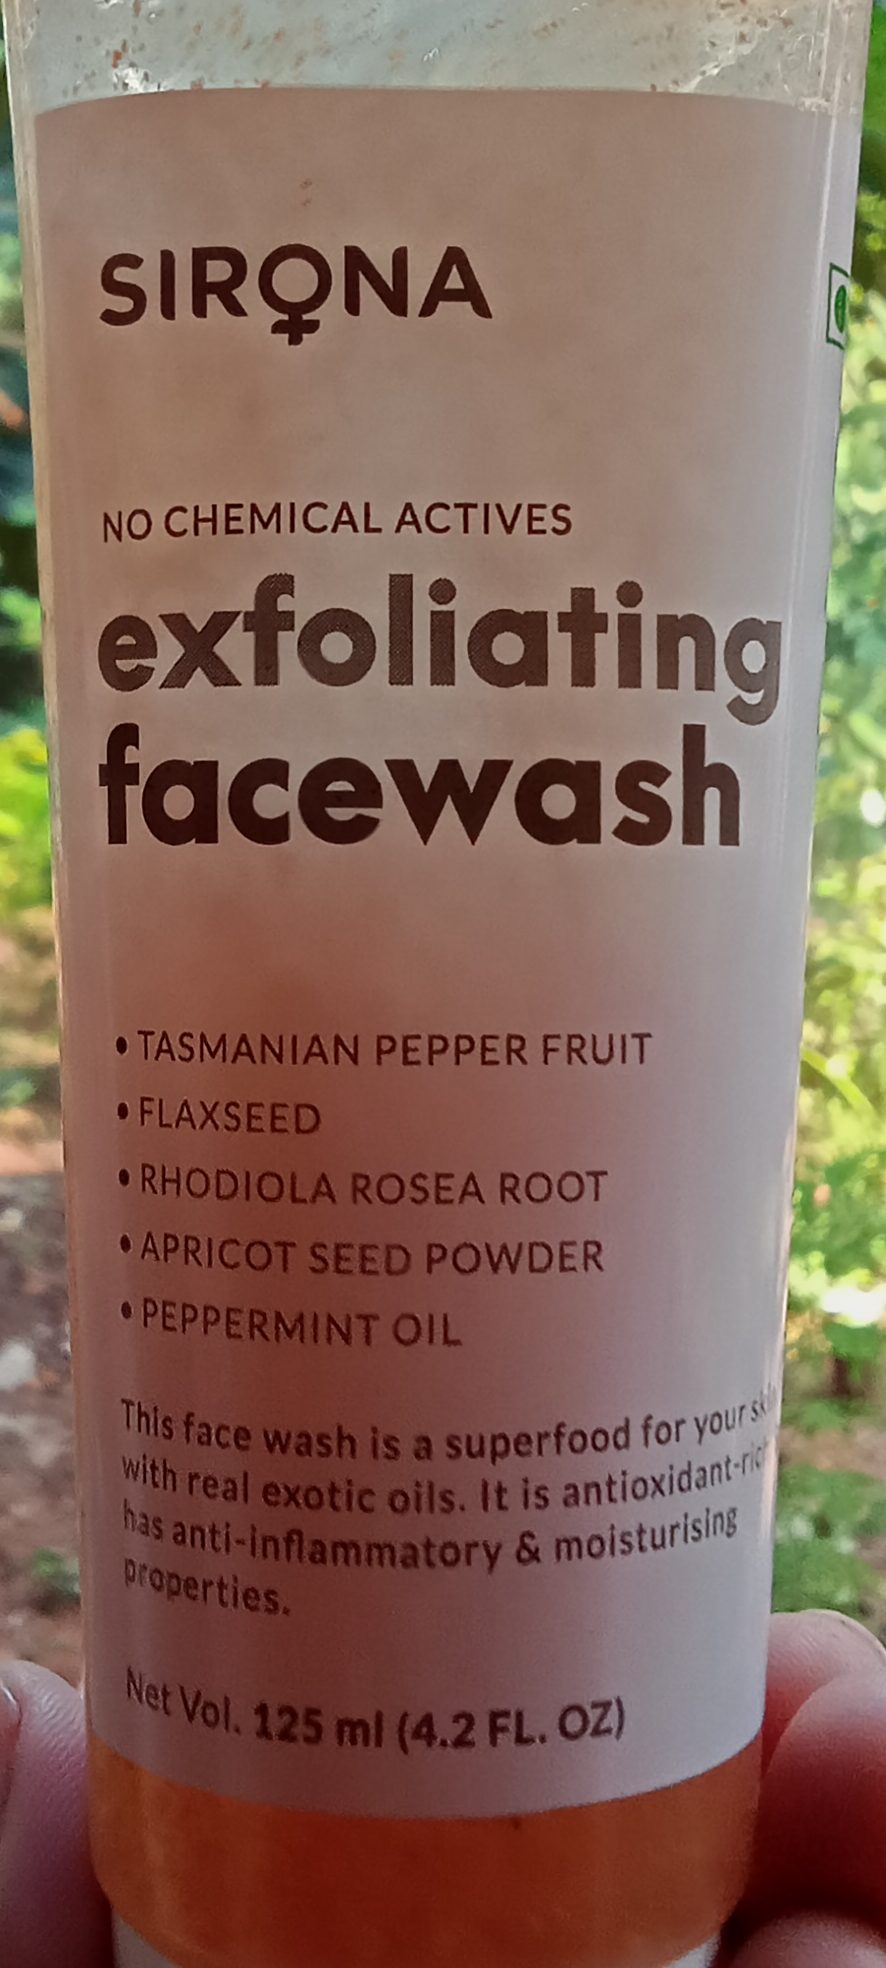 Sirona Exfoliating Facewash Review